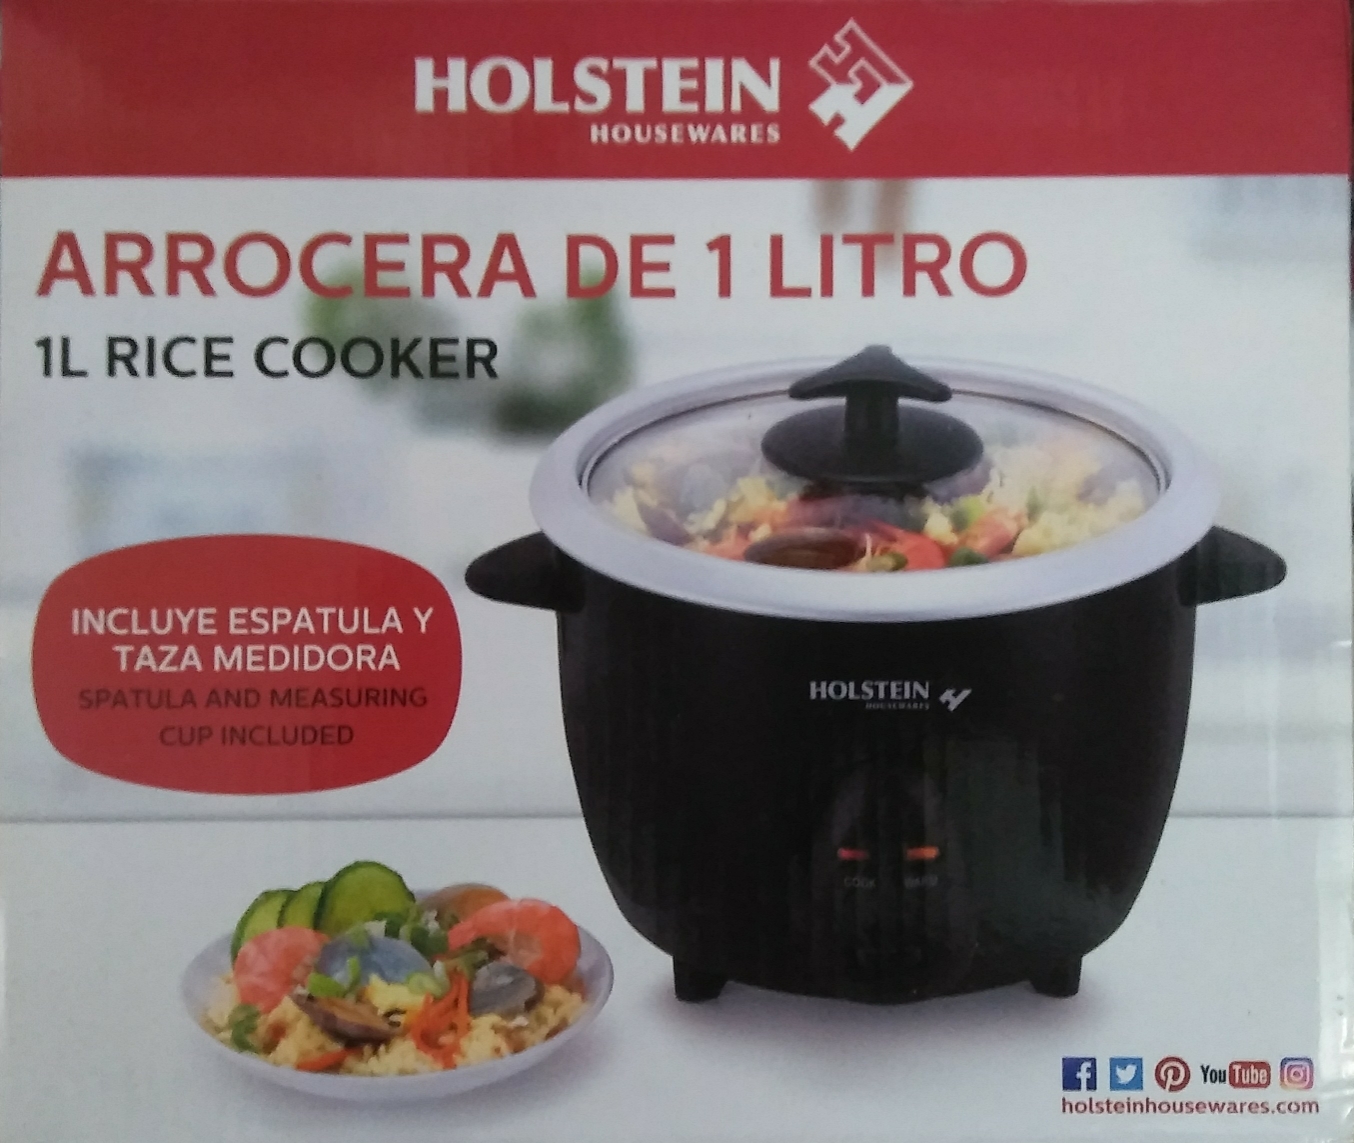 cocina - Arrocera de 1 litro  Holstein
1L rice cooker